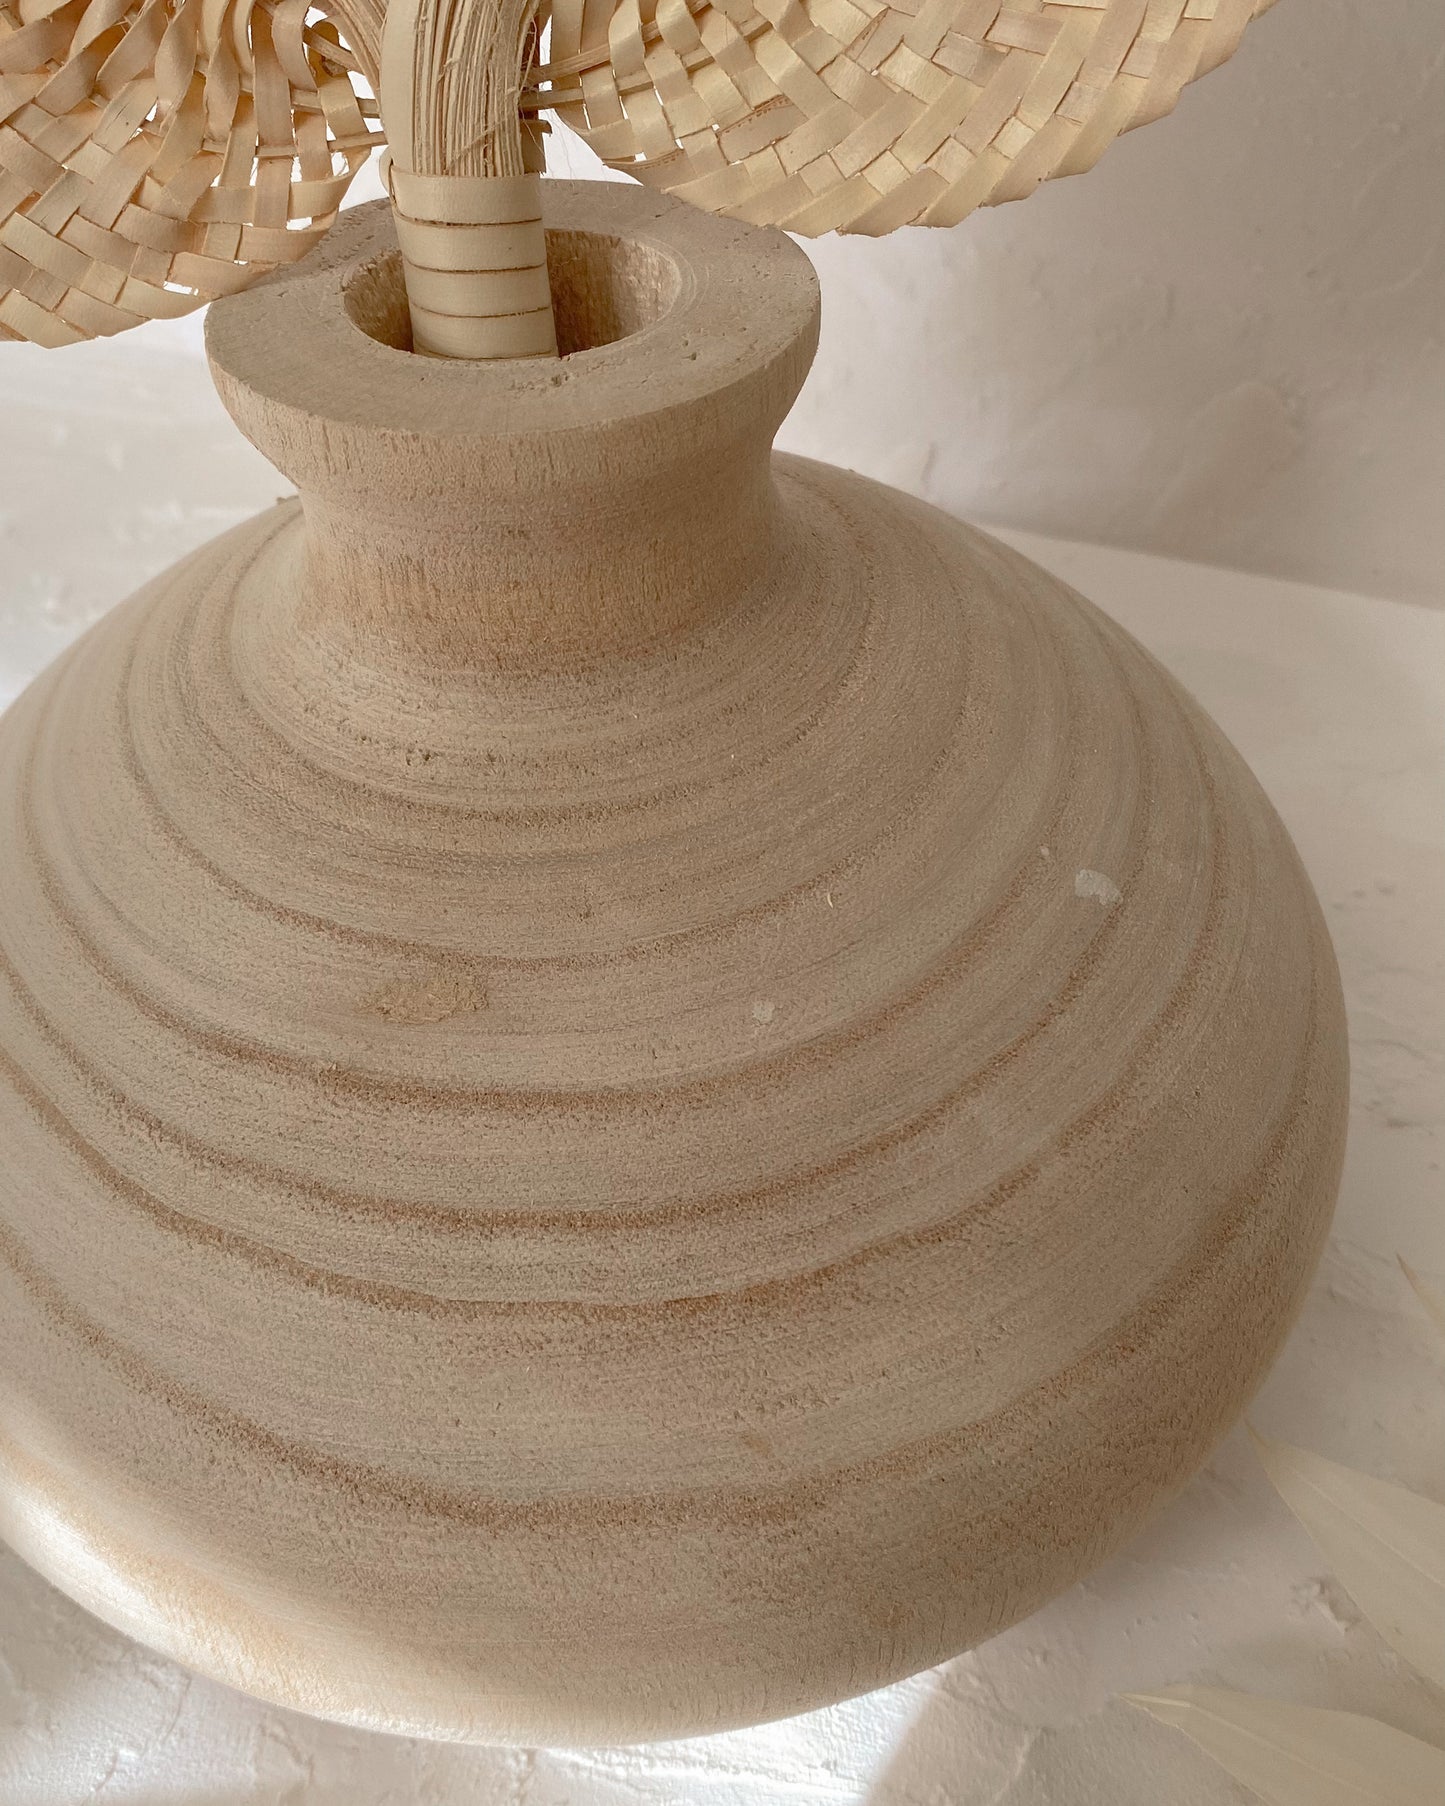 paulownia wood vase